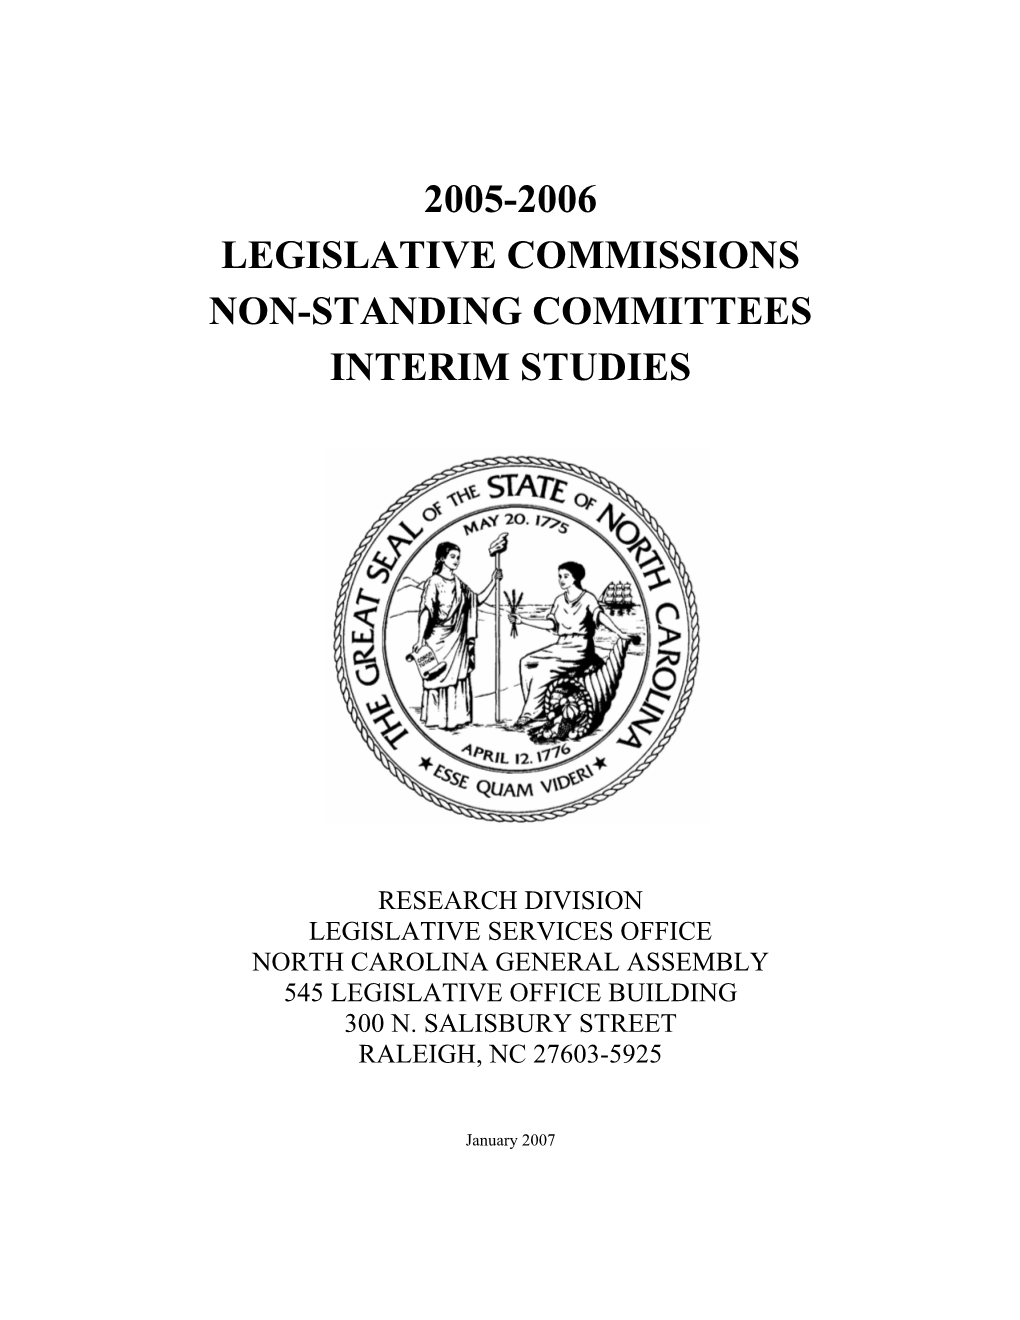 2005-2006 Legislative Commissions Non-Standing Committees Interim Studies